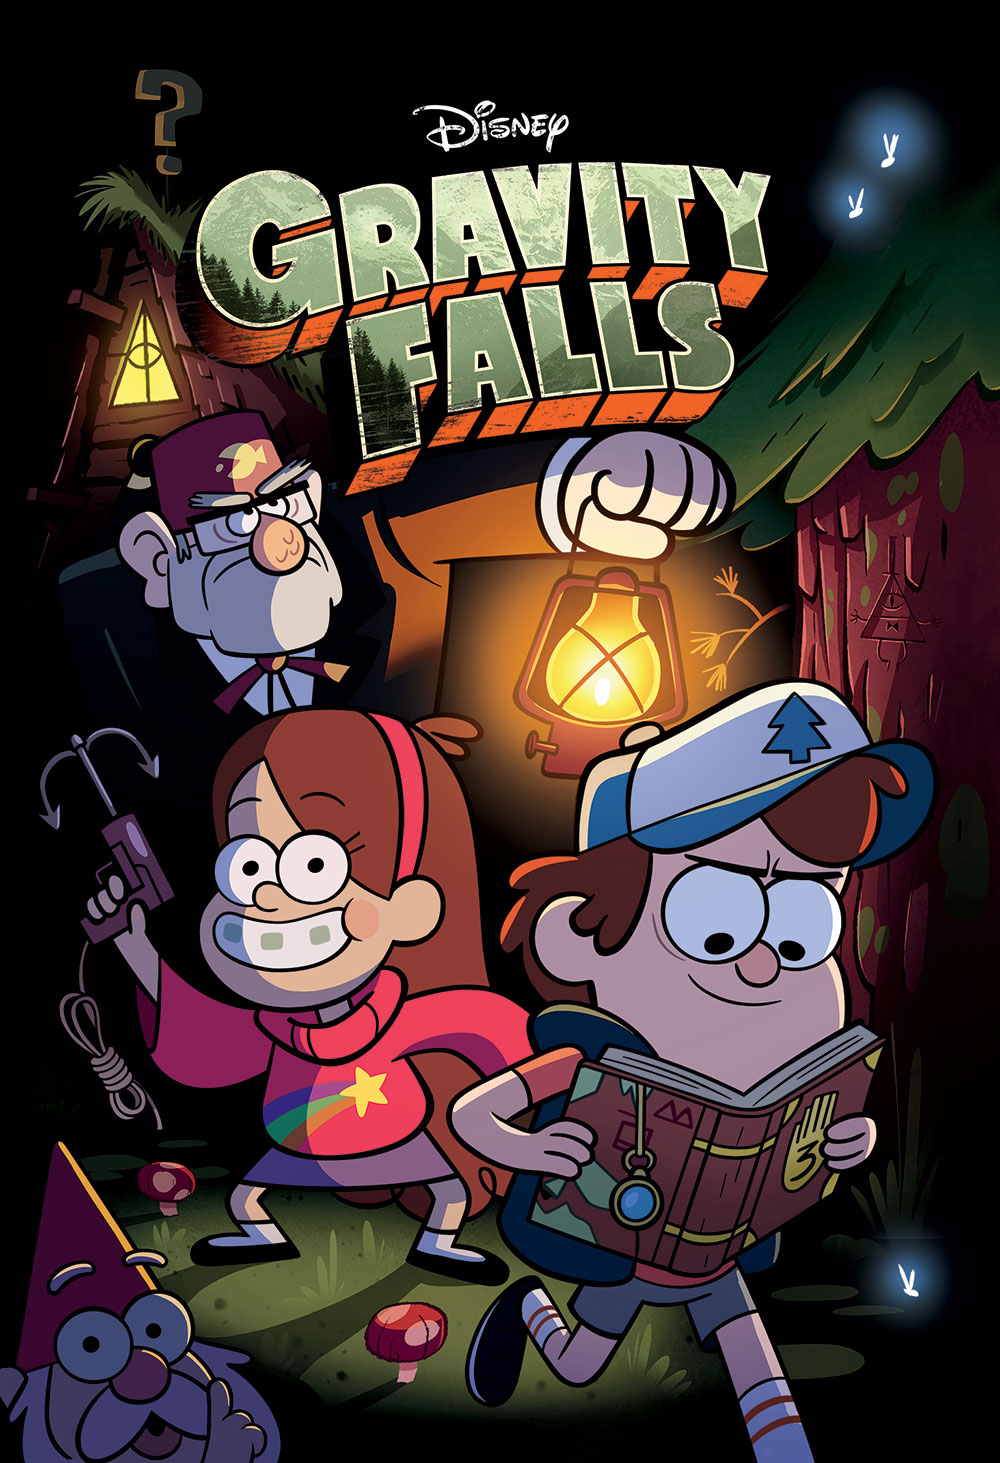 The Gravity Falls wiki